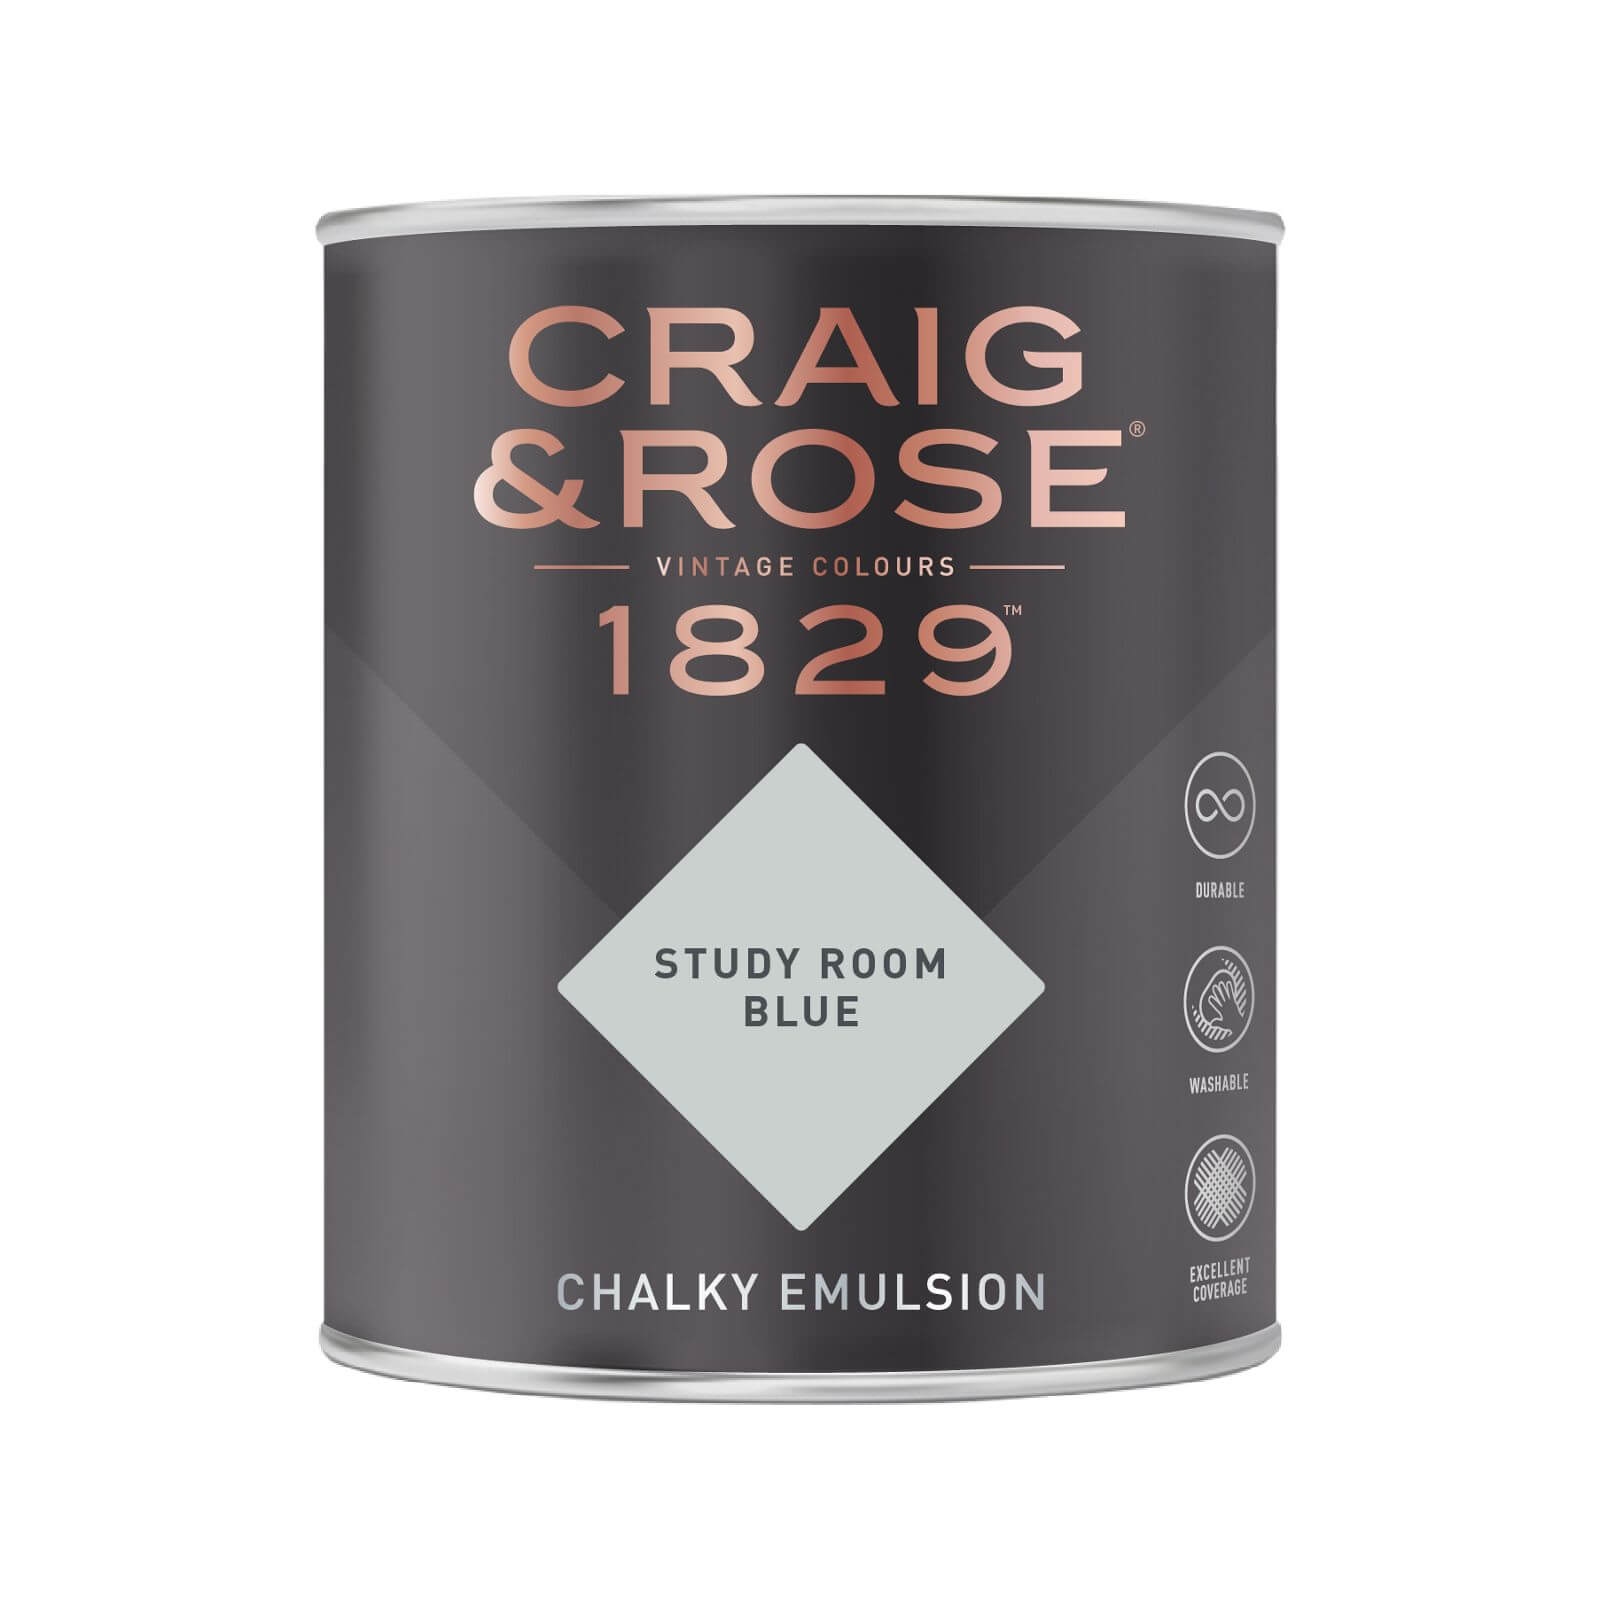 Craig & Rose 1829 Chalky Emulsion Paint Study Room Blue - 750ml